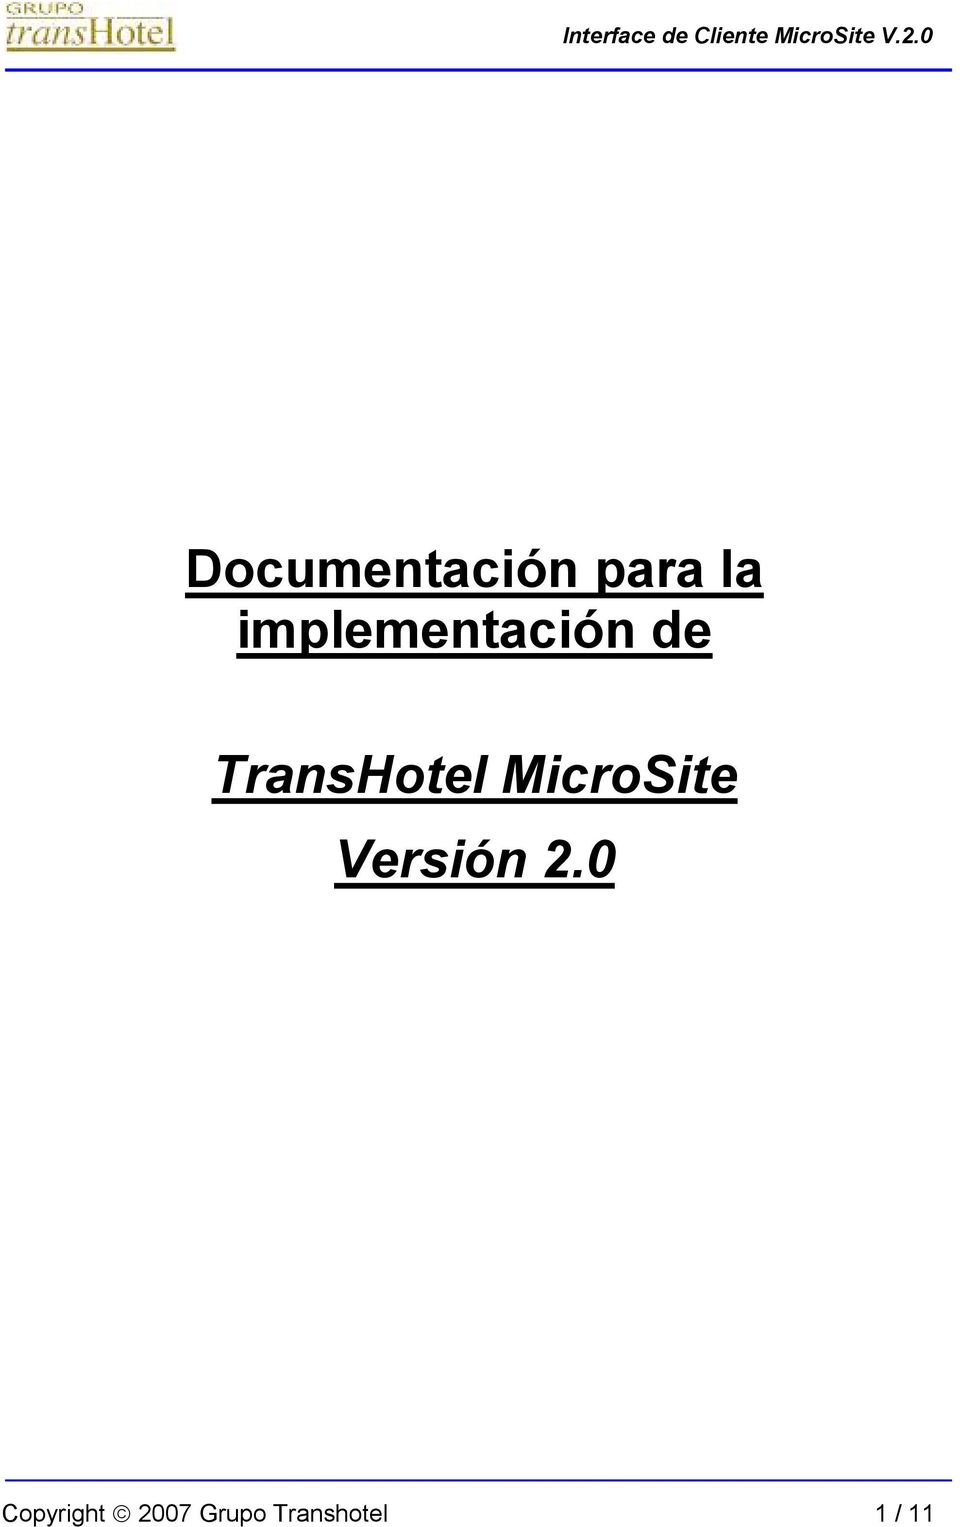 TransHotel MicroSite